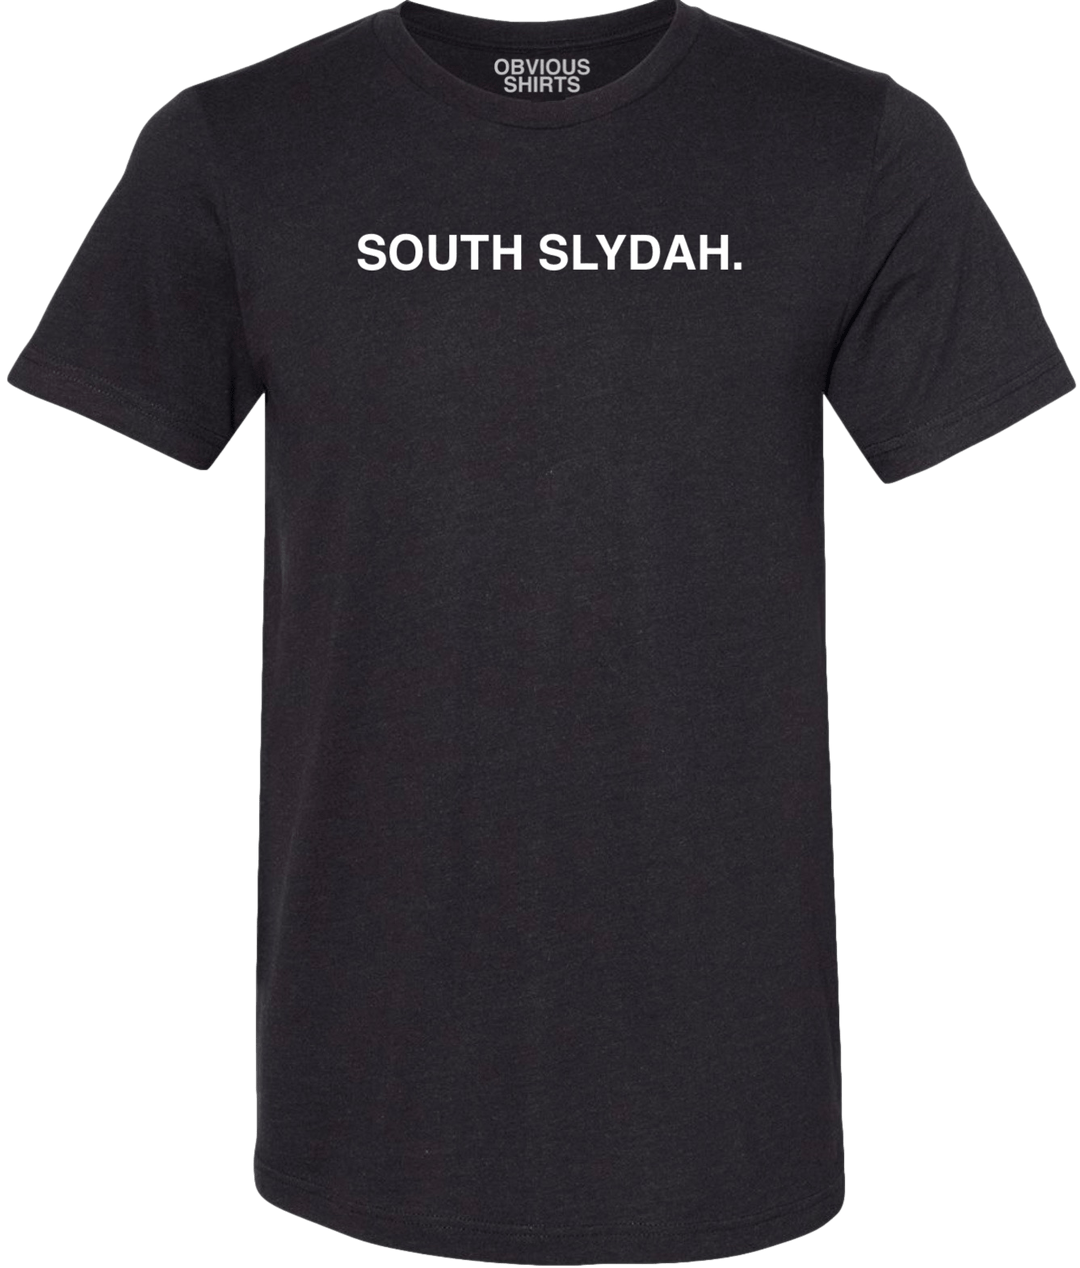 SOUTH SLYDAH. - OBVIOUS SHIRTS.